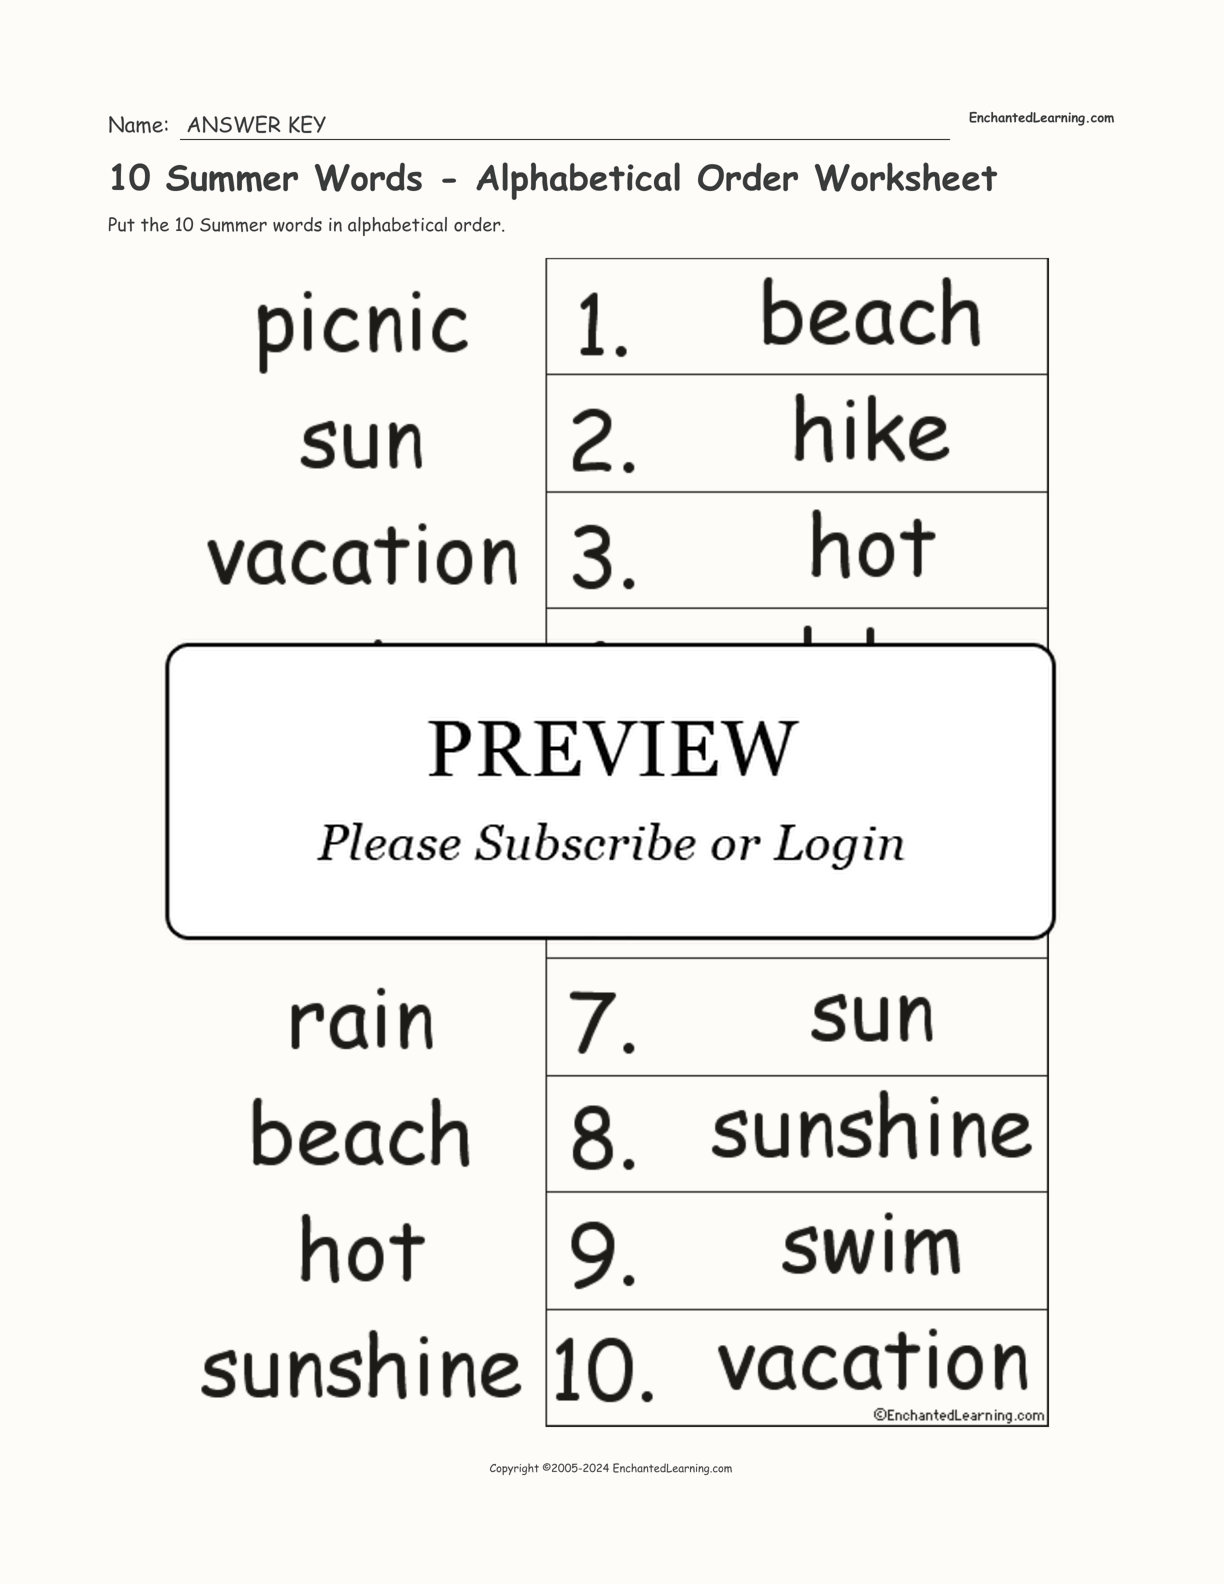 10 Summer Words - Alphabetical Order Worksheet interactive worksheet page 2